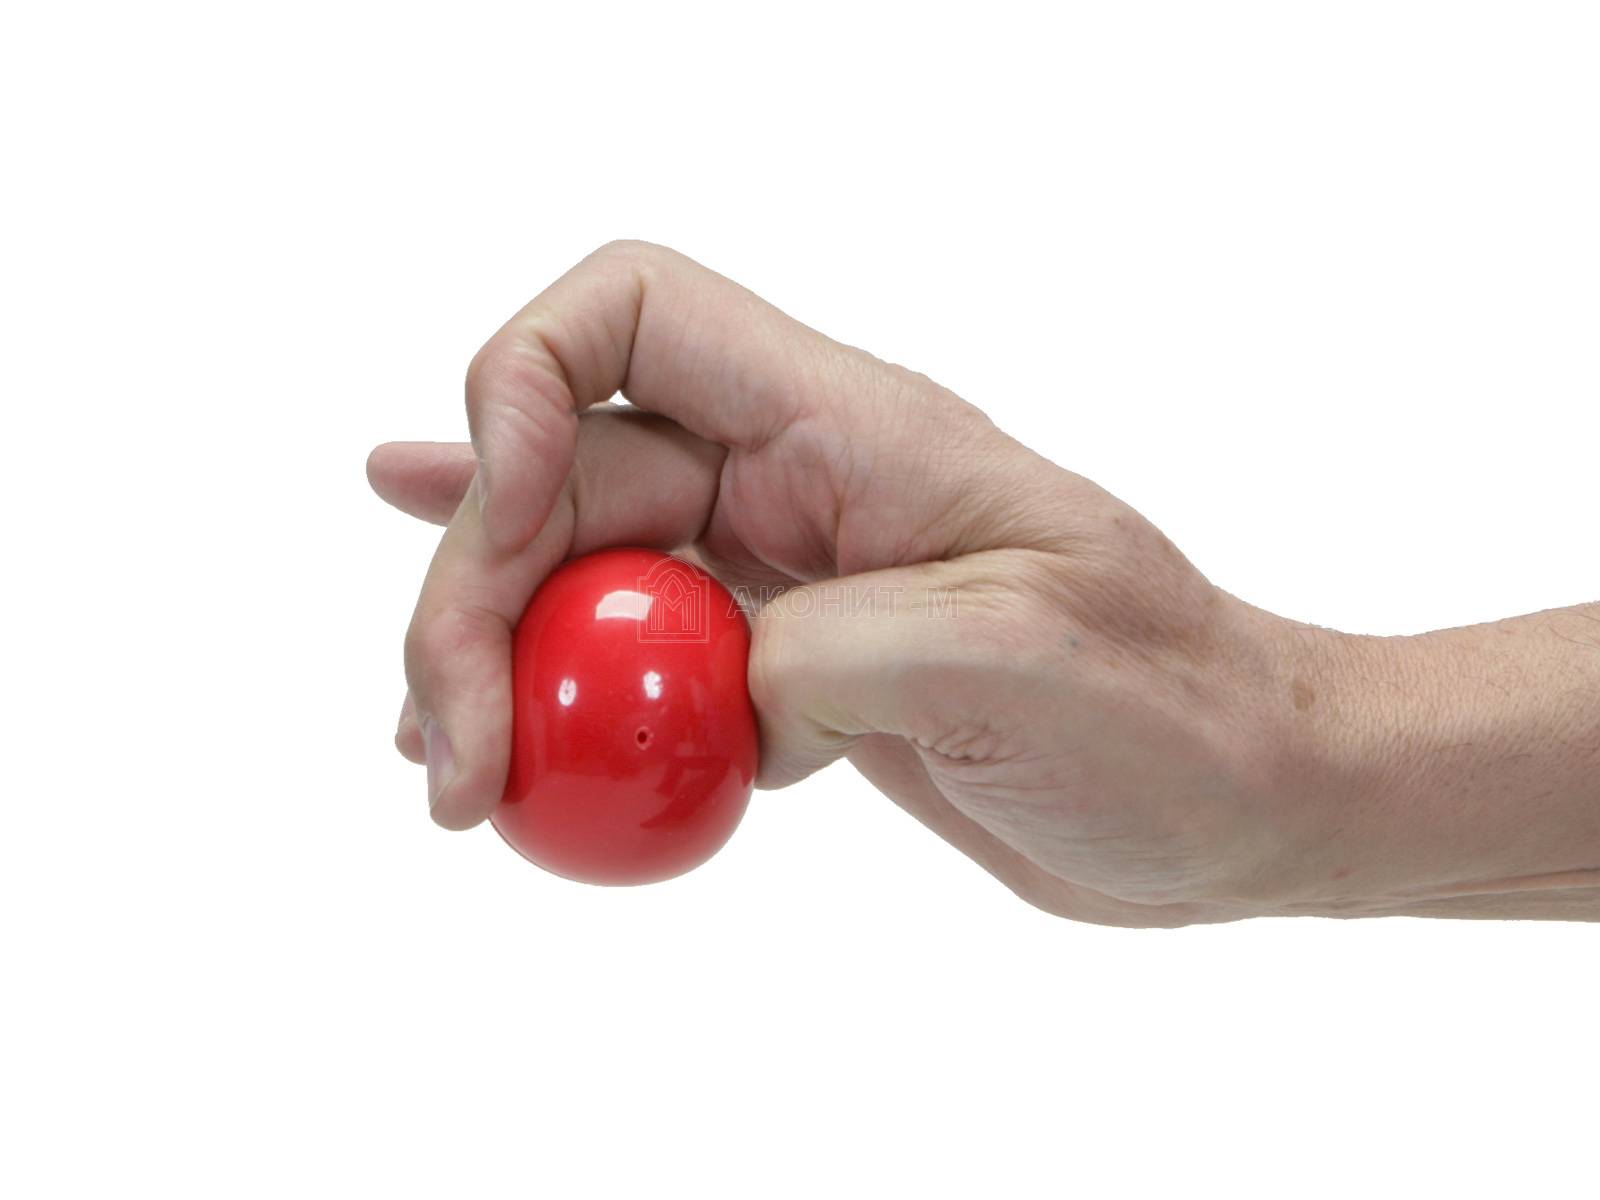 Мячи для реабилитации рук "Терра"